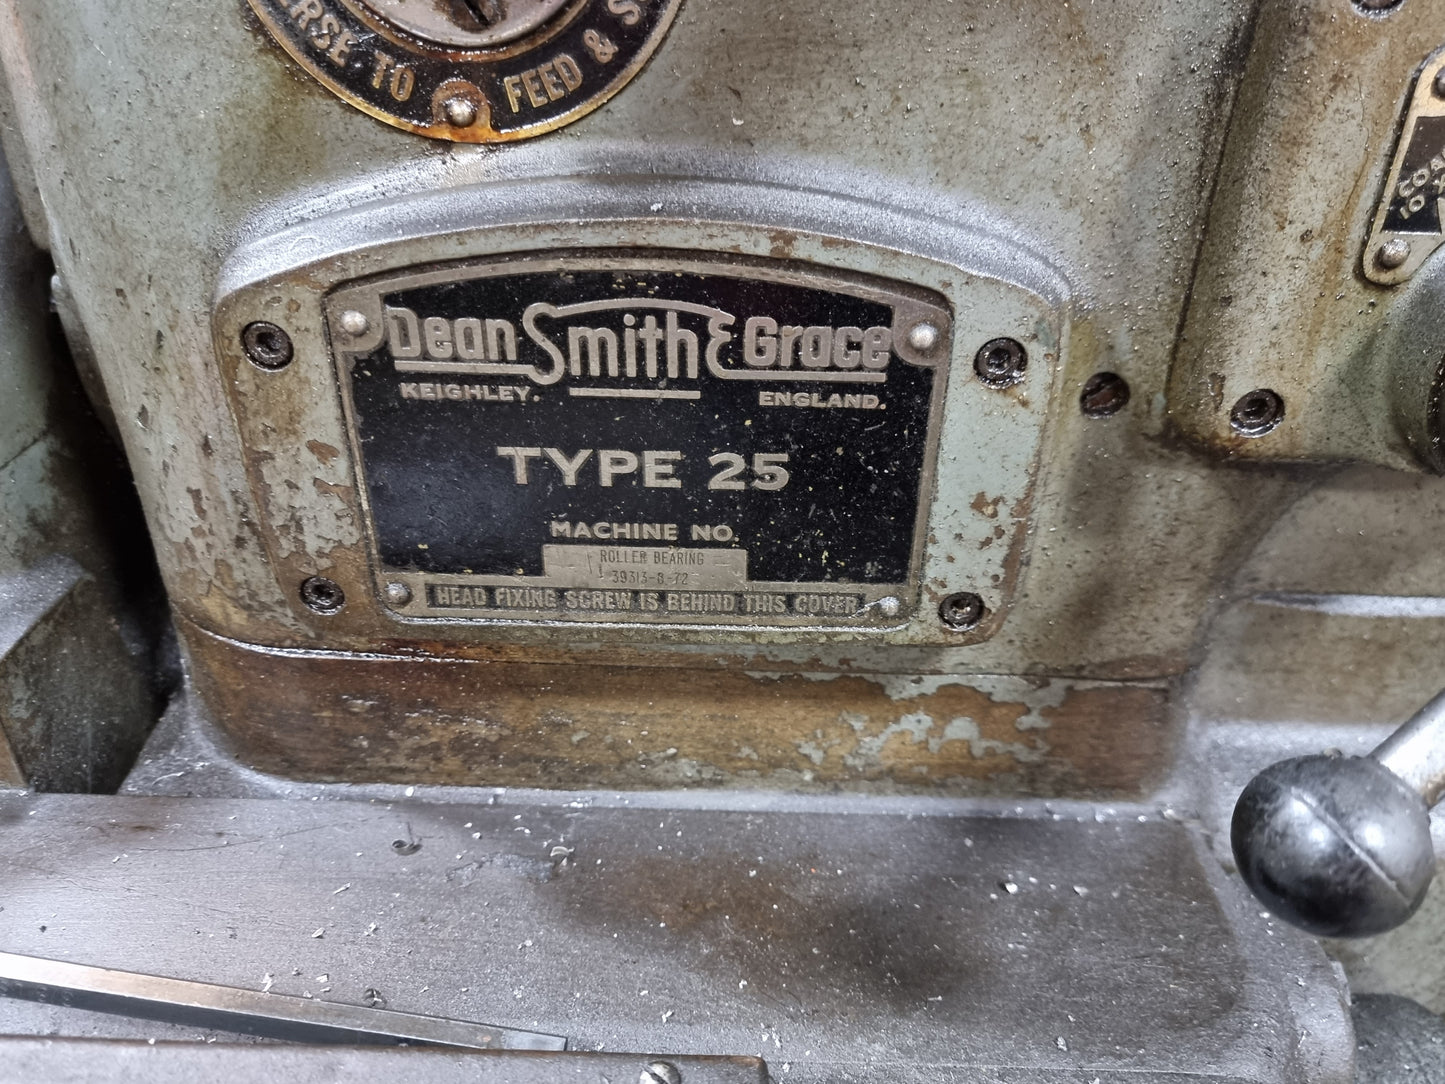 Dean Smith Grace Type 25 lathe Digital Readout system